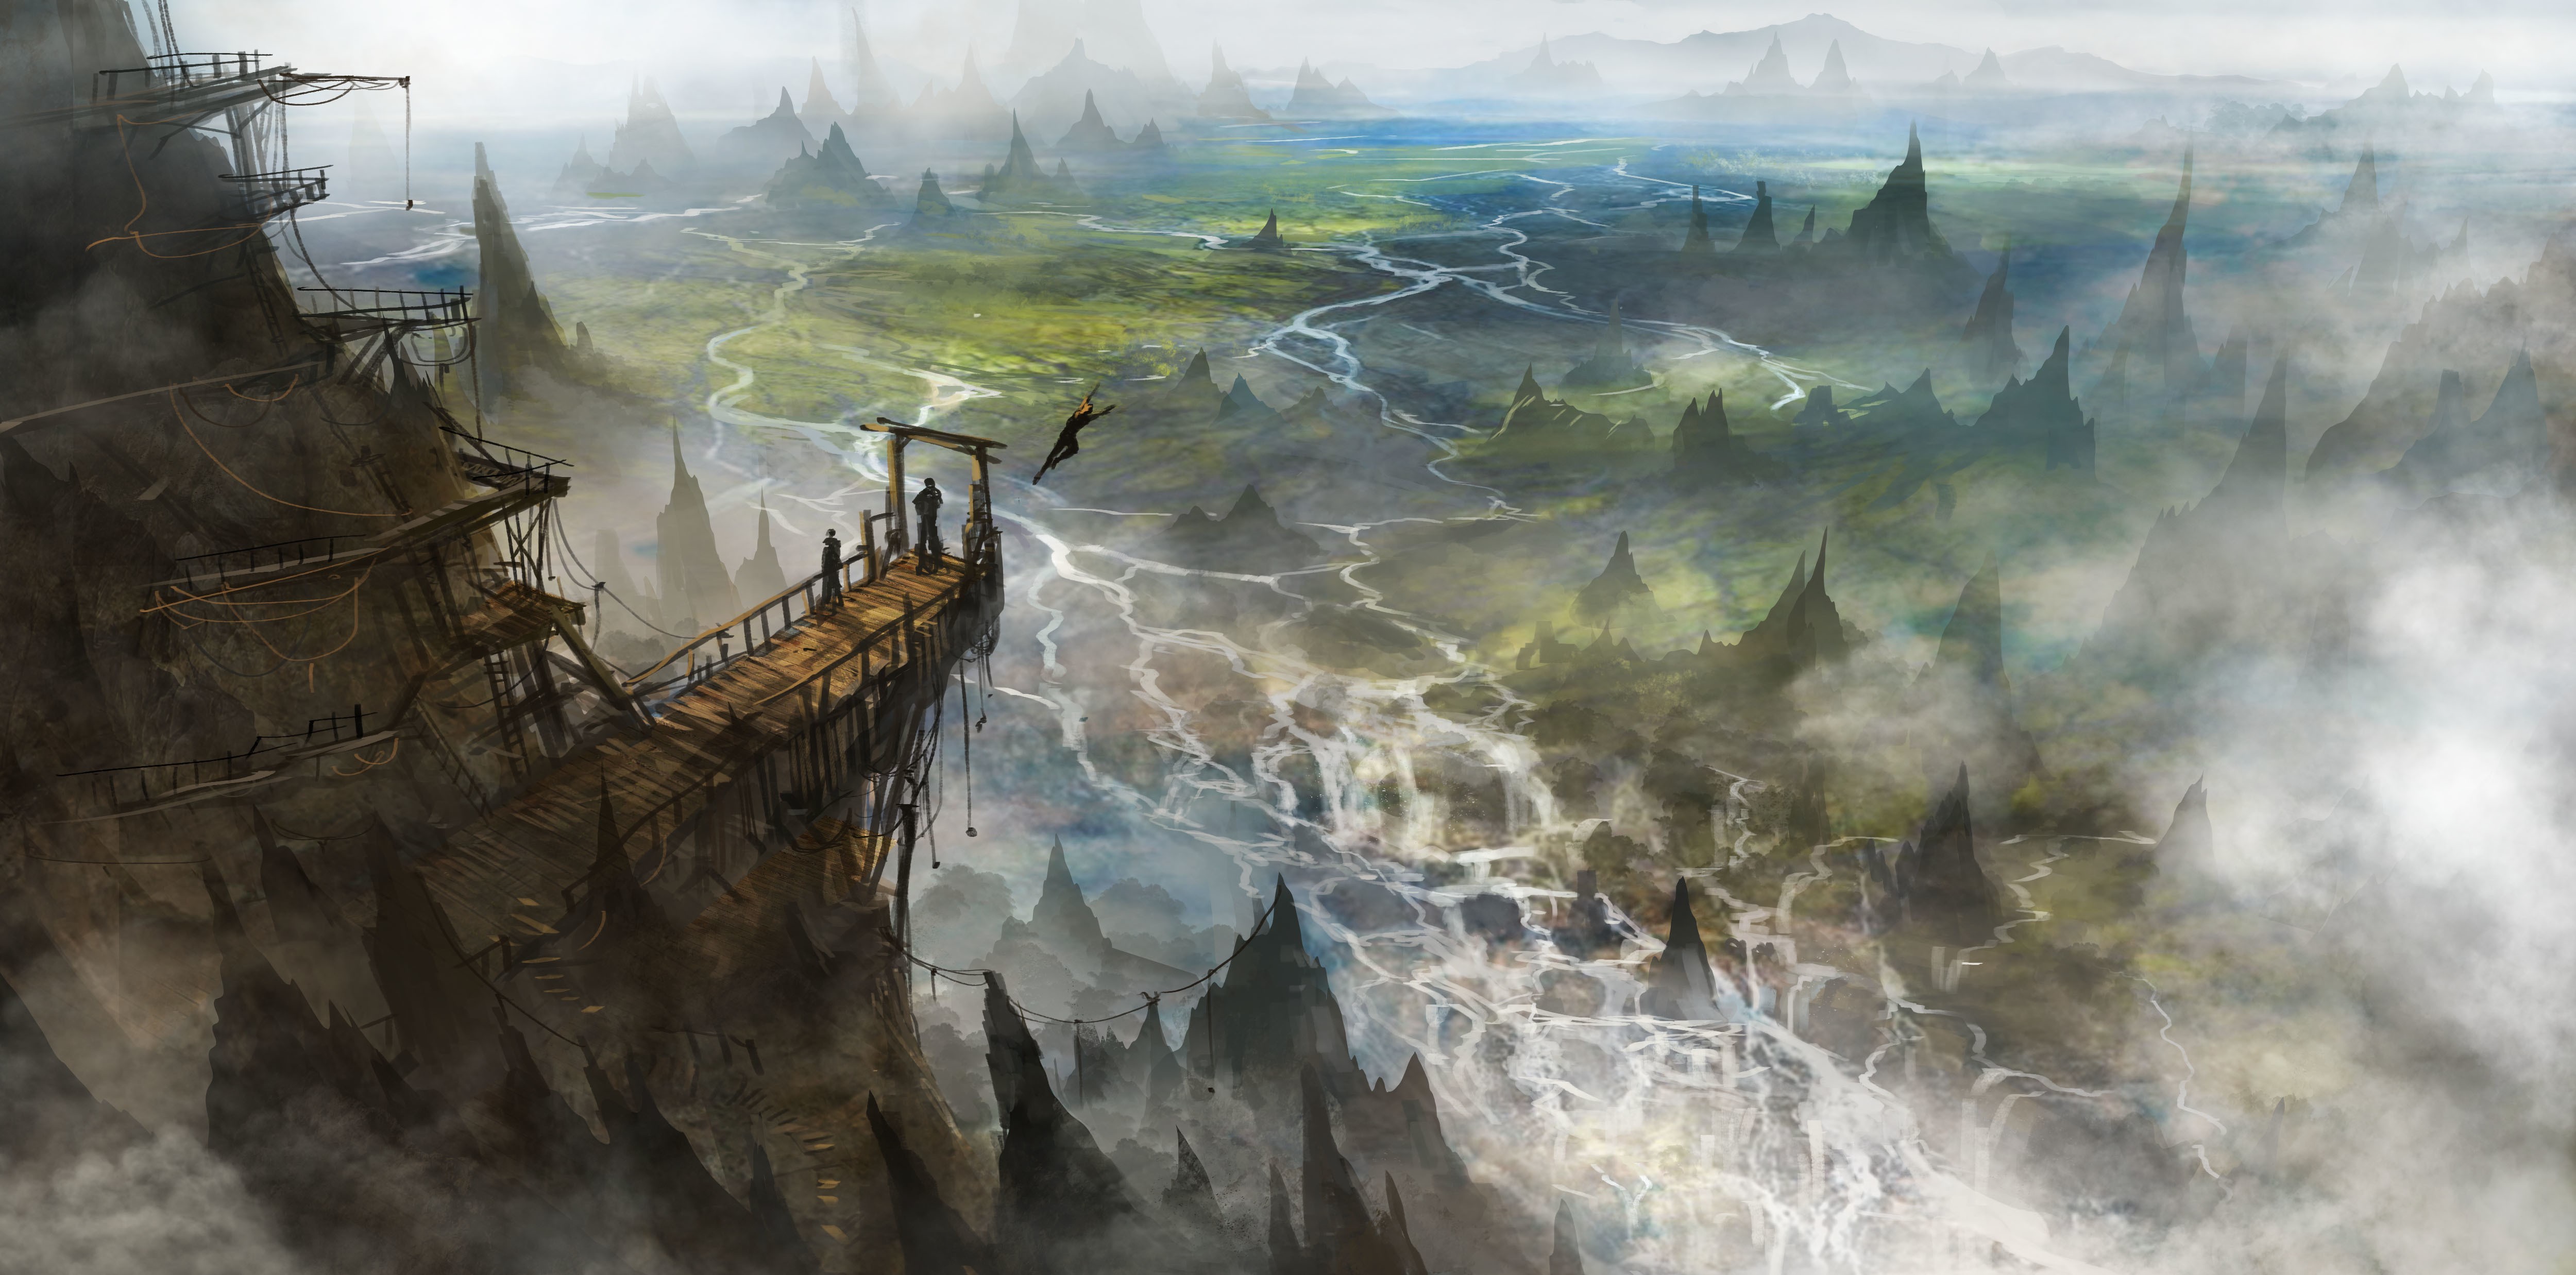 Fantasy Landscape 4k Ultra HD Wallpaper | Background Image | 5000x2475